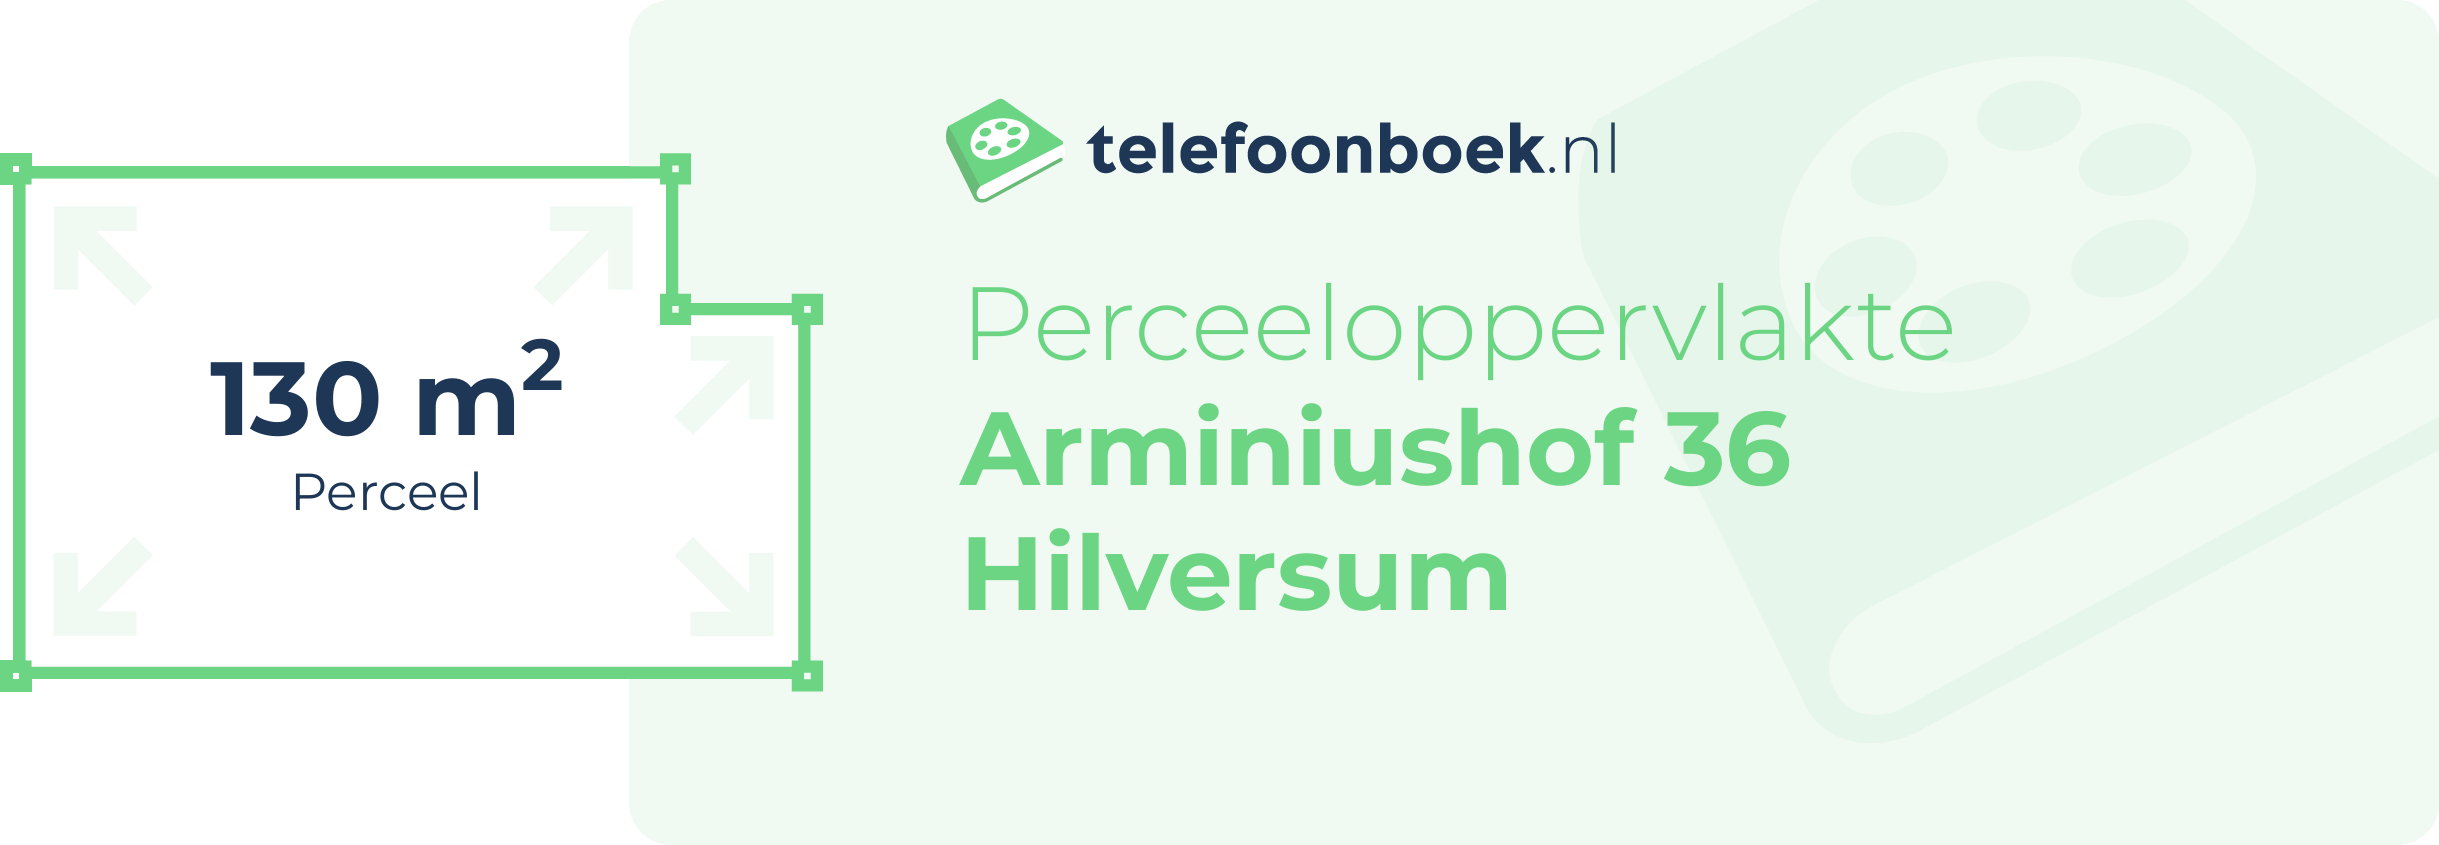 Perceeloppervlakte Arminiushof 36 Hilversum